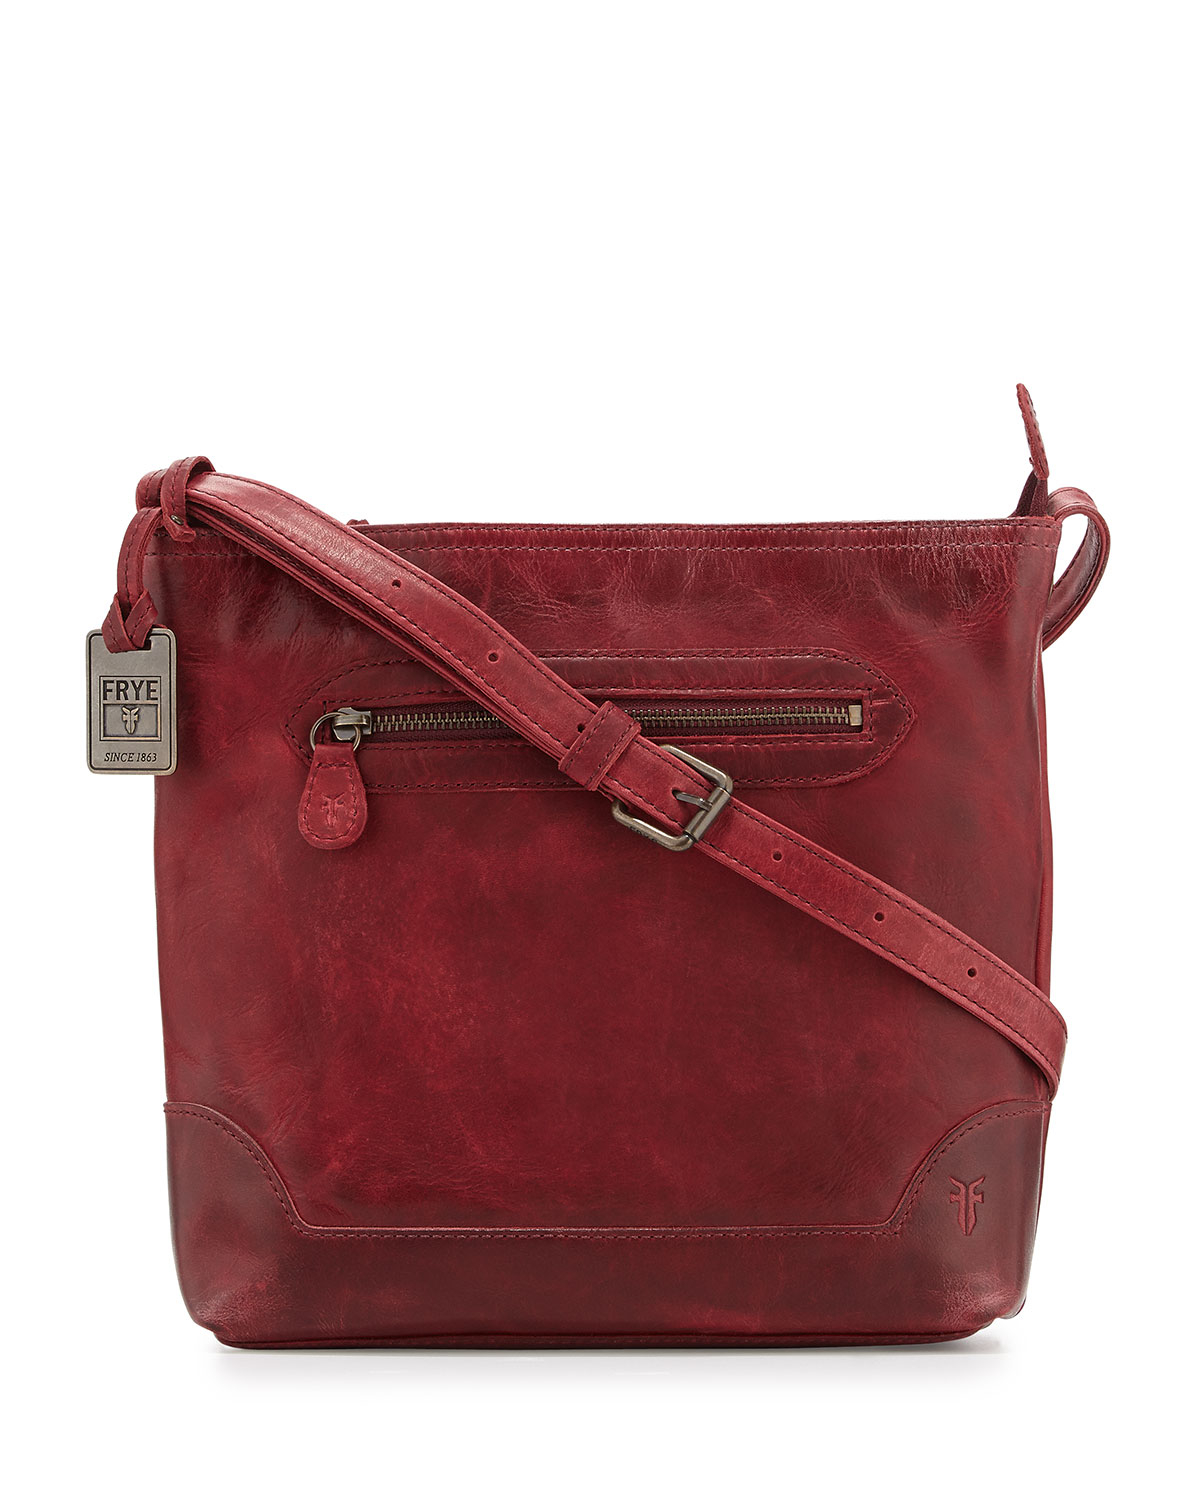 Frye Melissa Tumbled Leather Crossbody Bag in Red (BURGUNDY) | Lyst